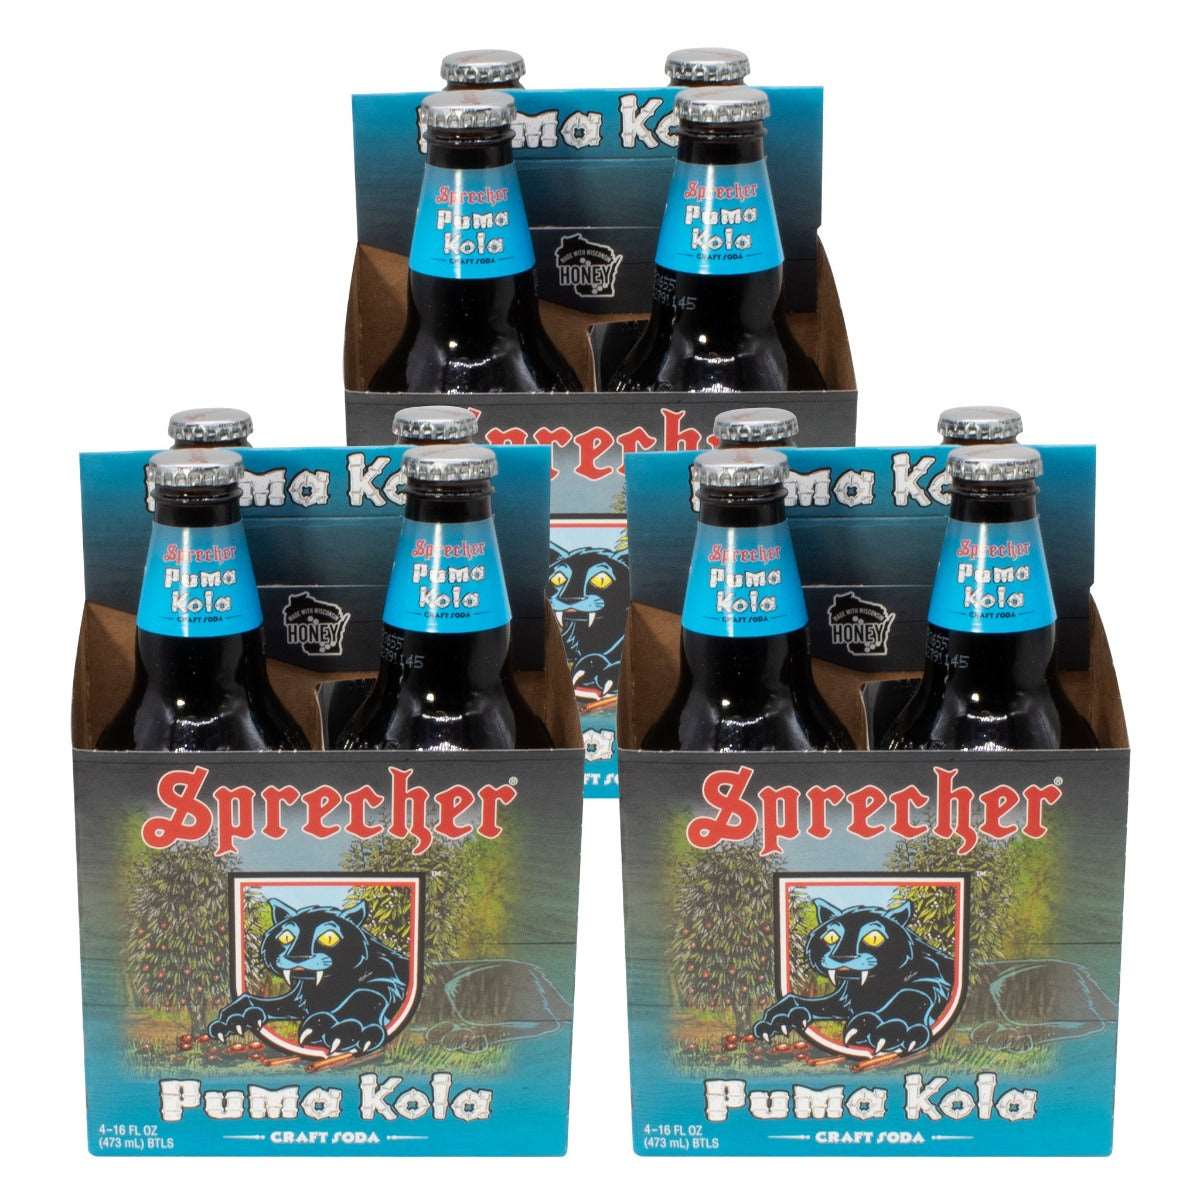 3 4-packs of Sprecher Puma Kola Soda